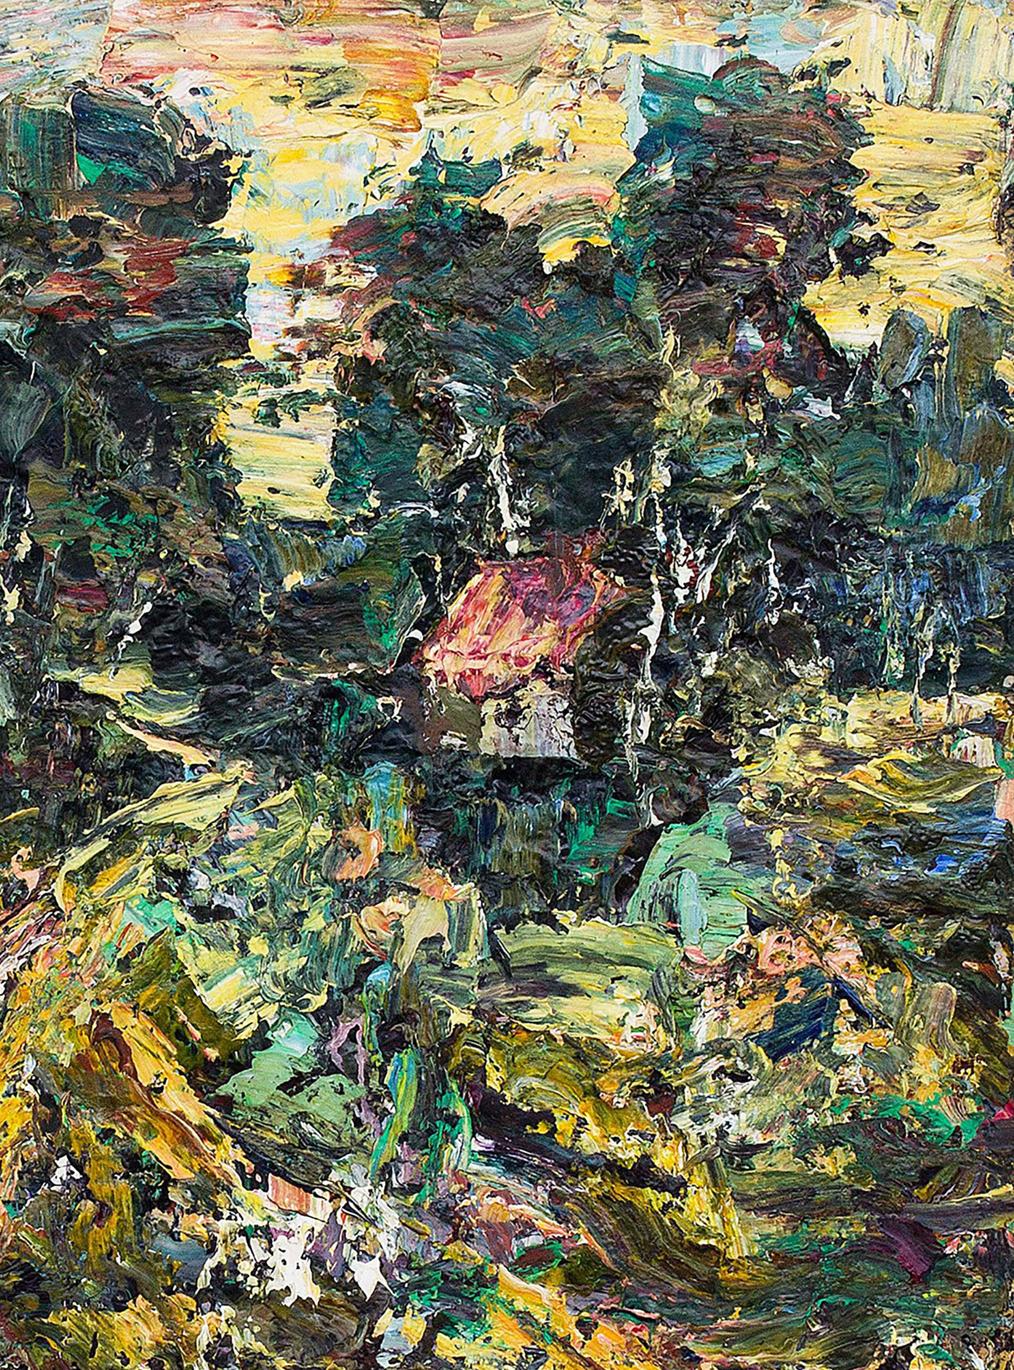 Vladimir Mazur's oil painting captures the essence of autumn